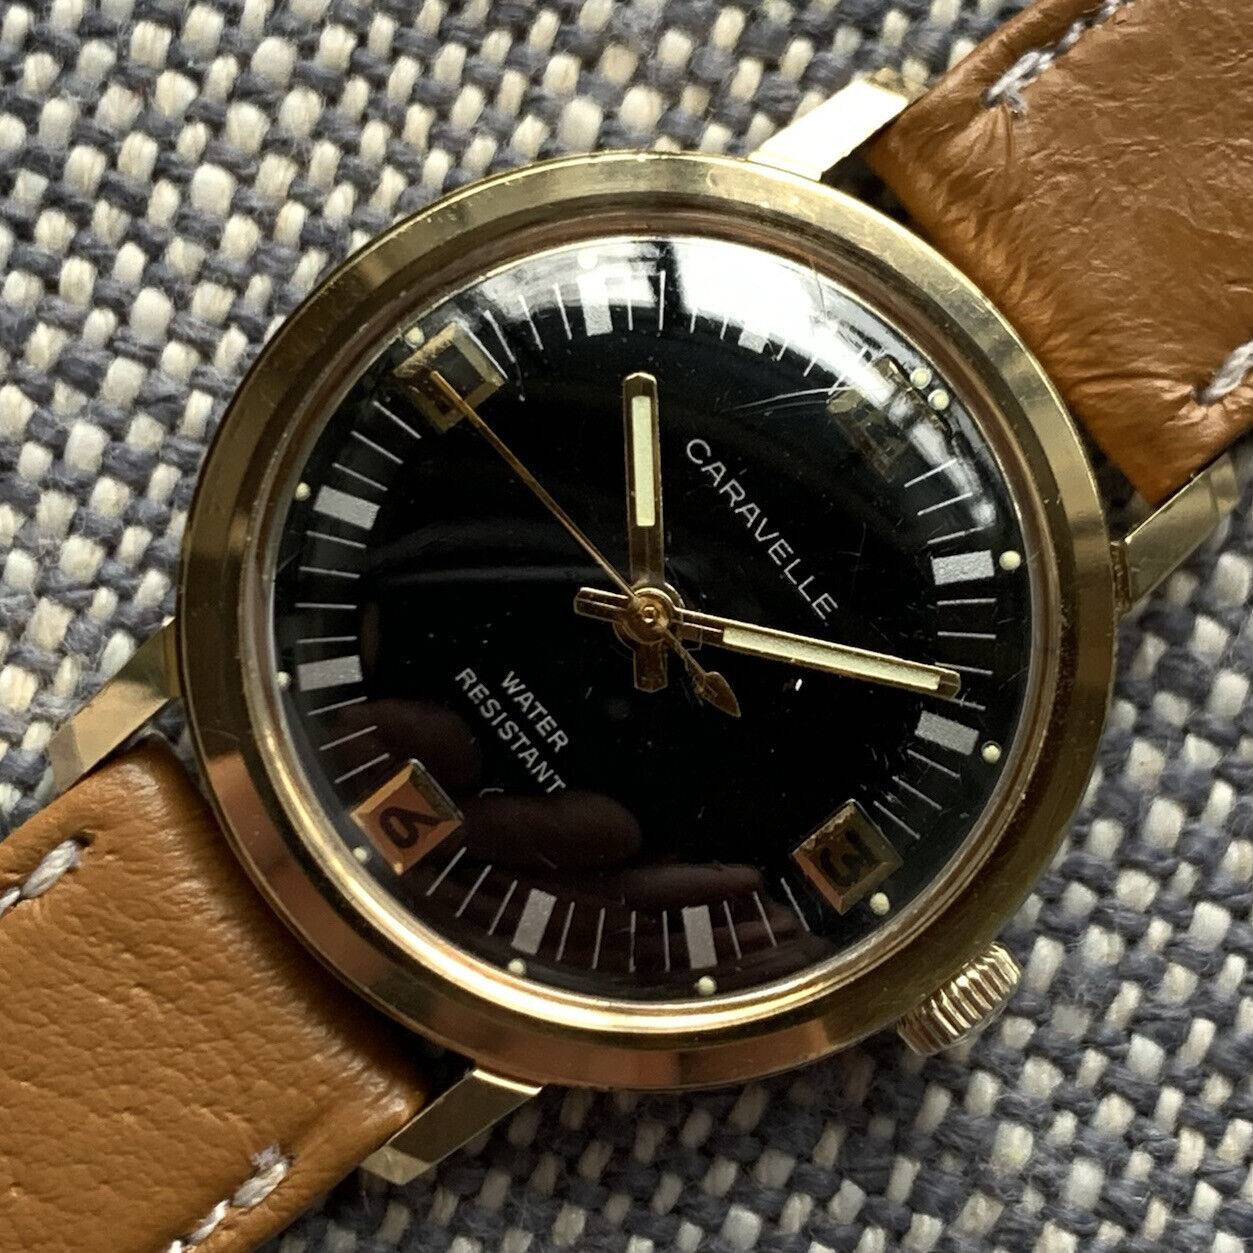 1975 Caravelle Black Dial Gold Tone Manual Wind Men's Wristwatch - Gorgeous!